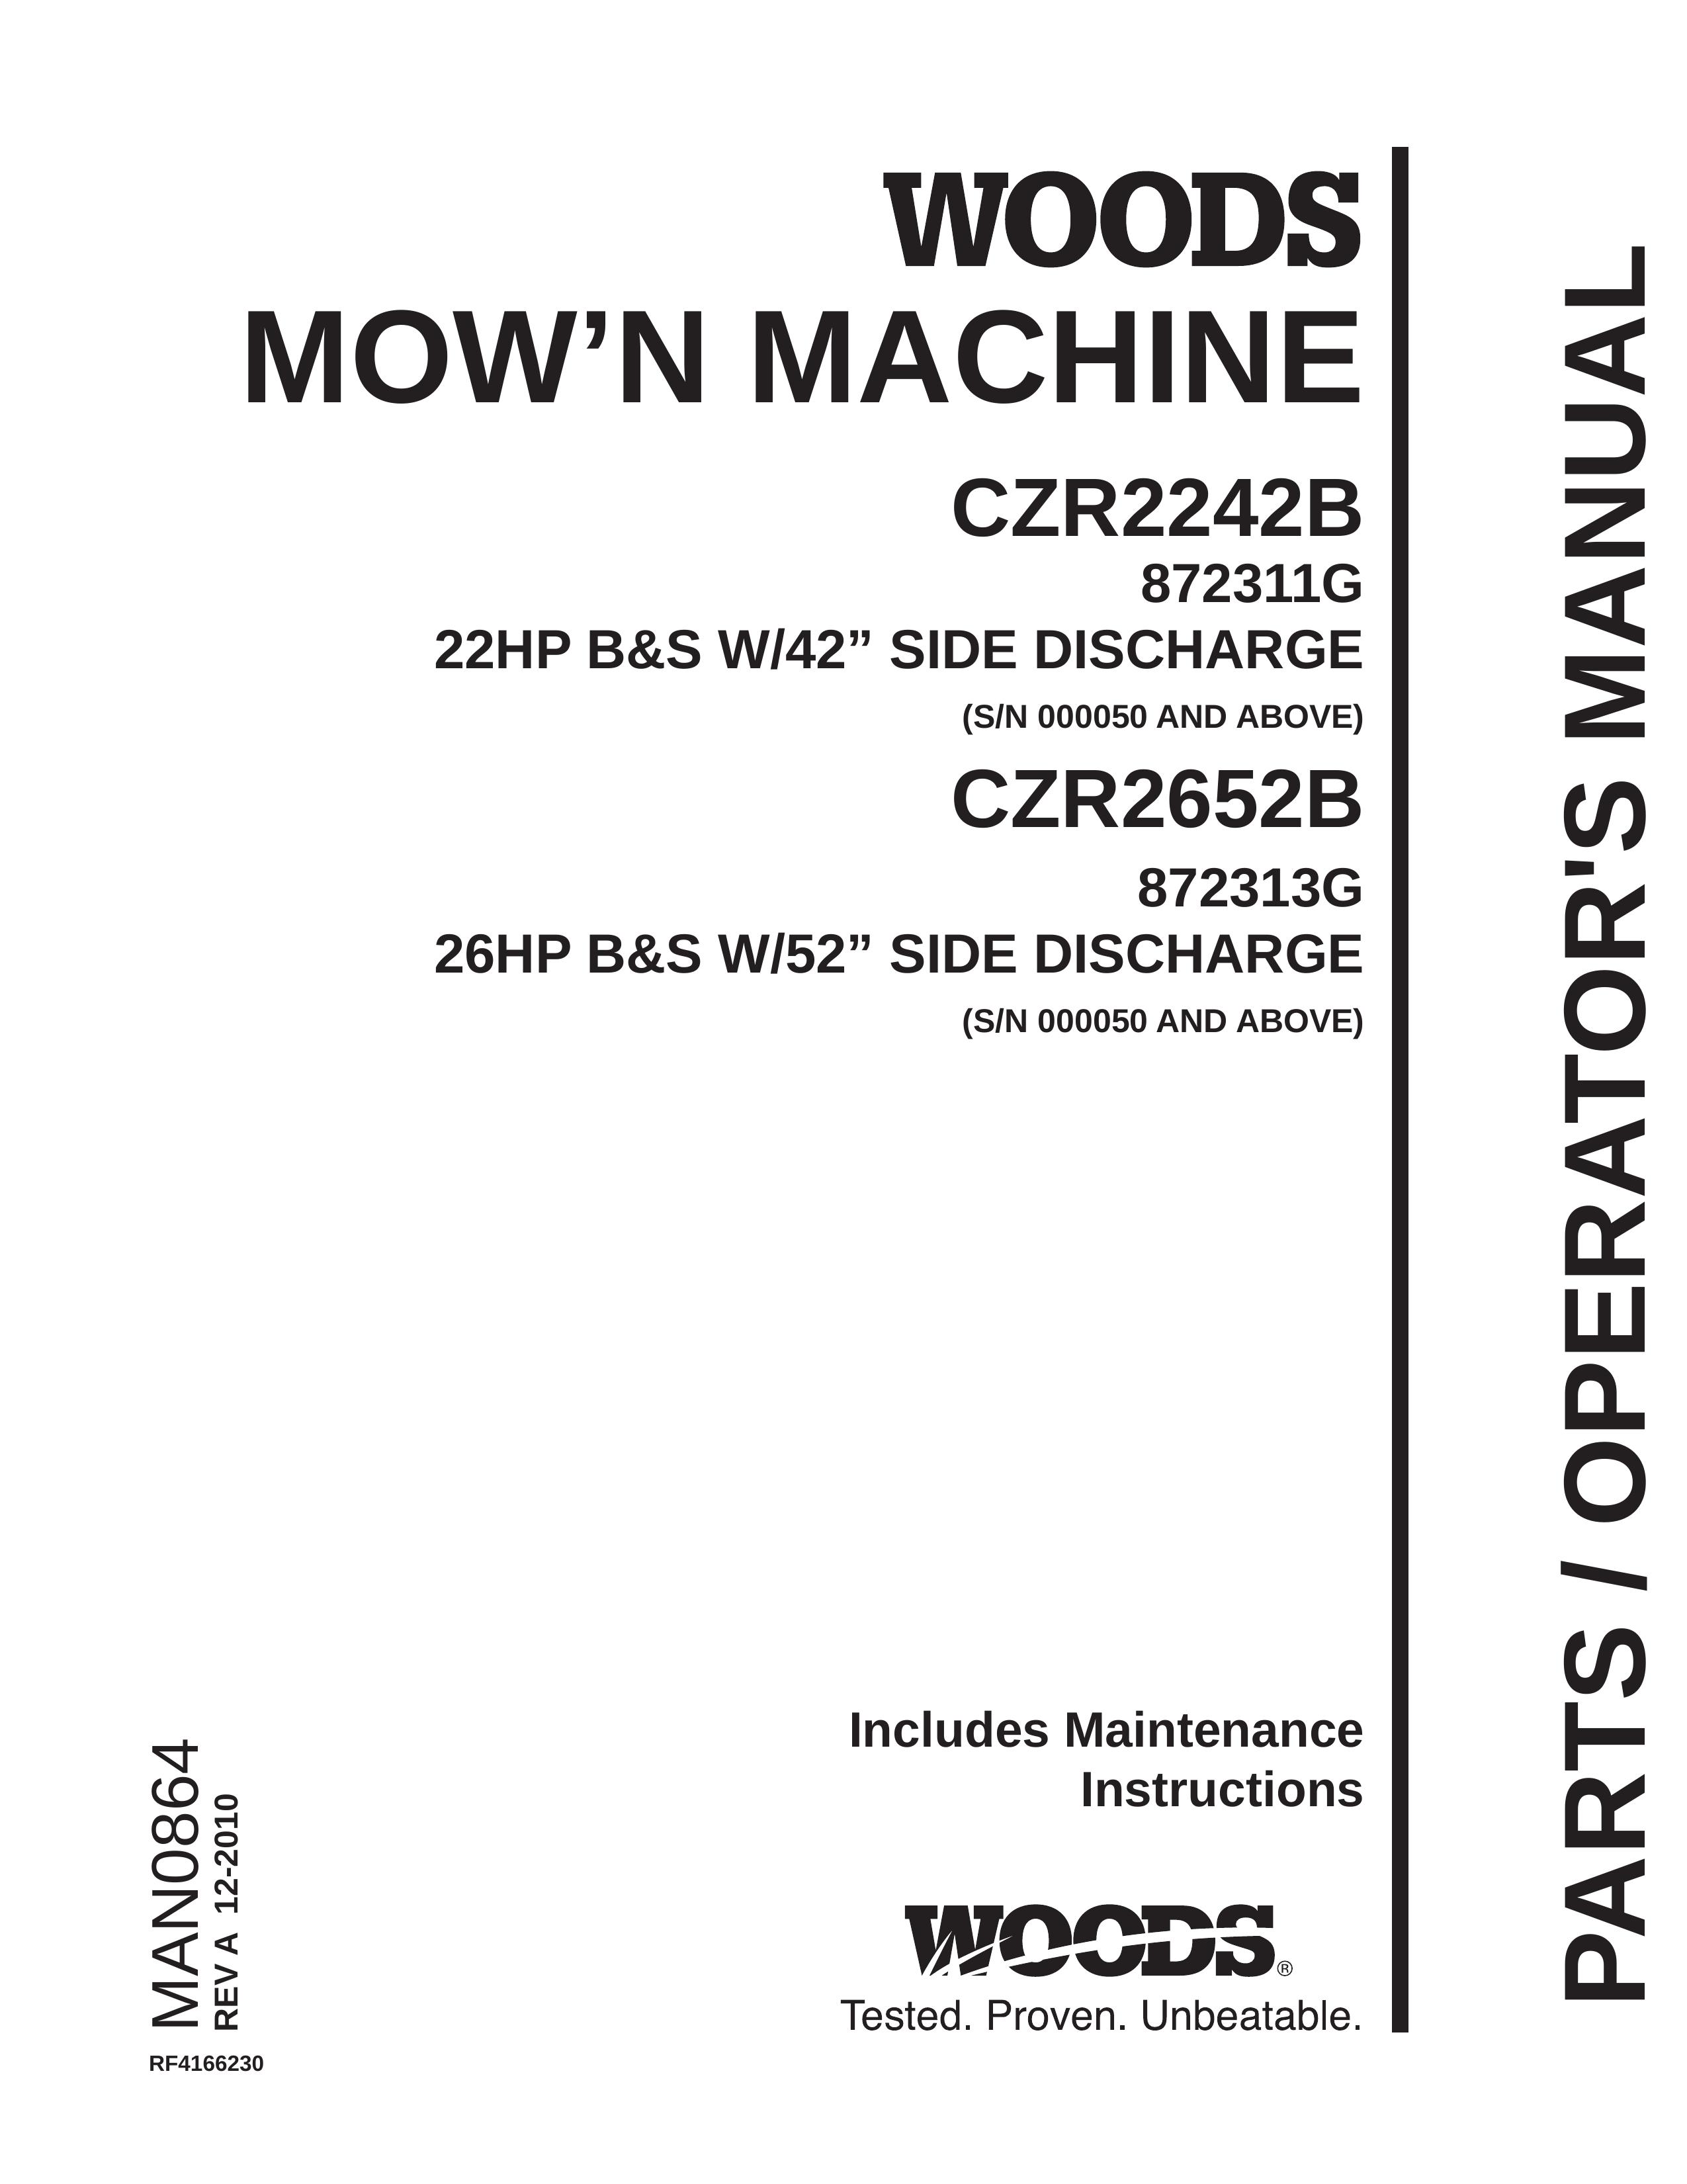 Woods Equipment CZR2242B Lawn Mower User Manual